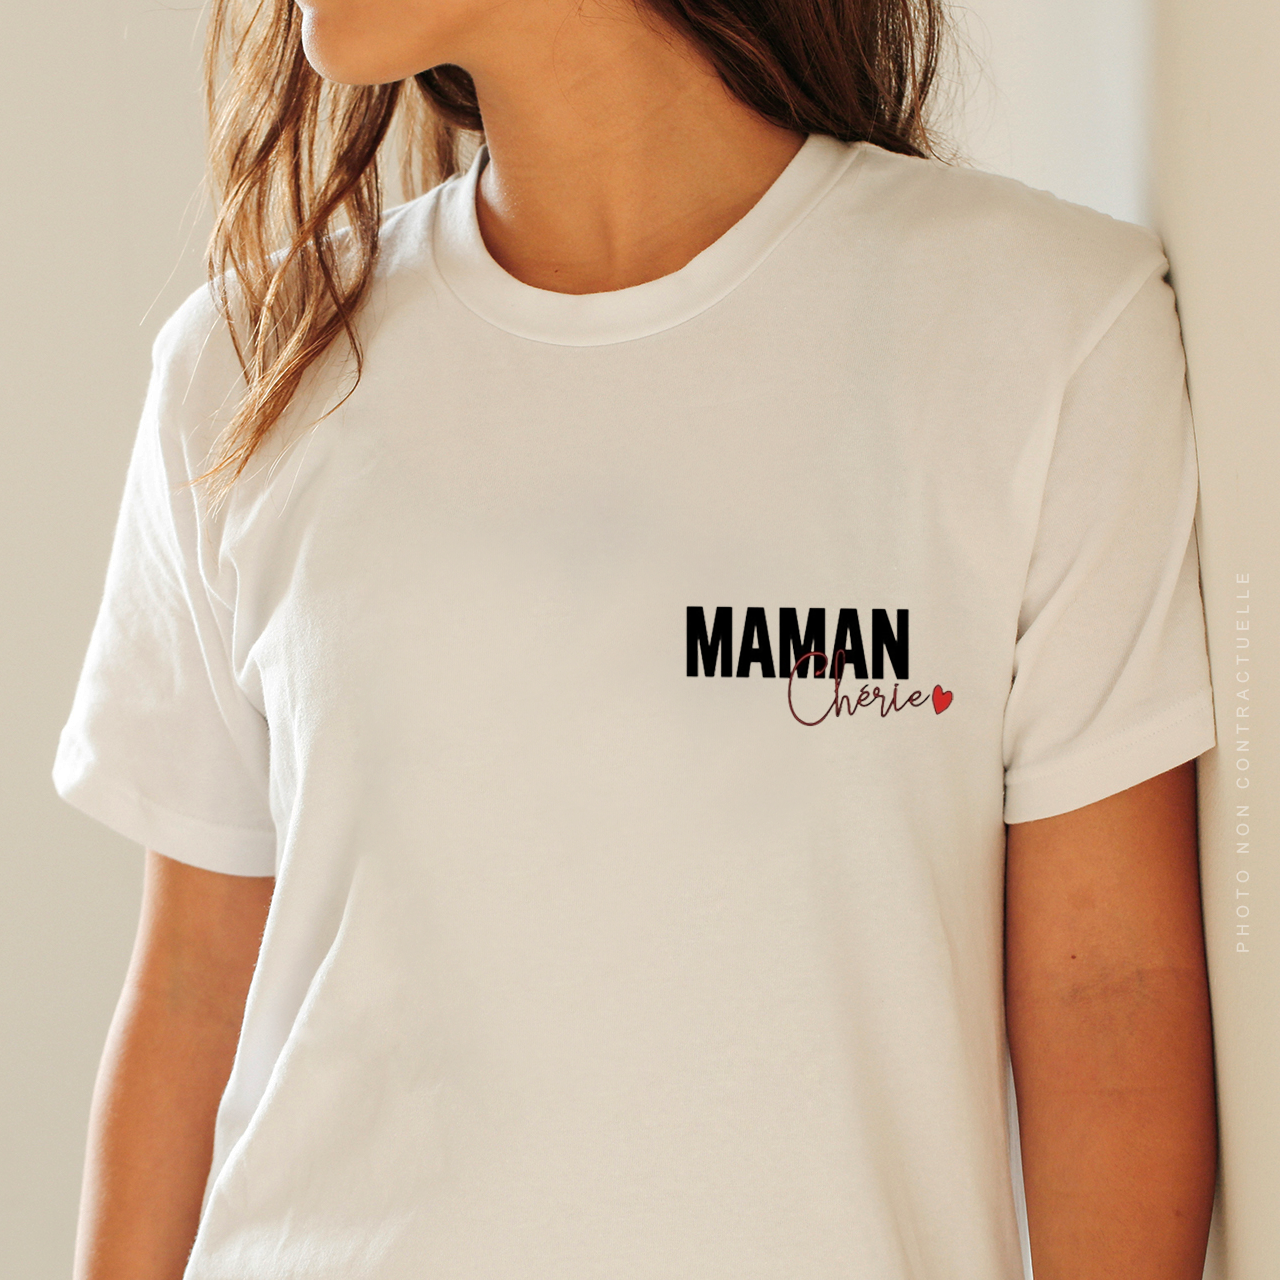 T-shirt / Maman chérie